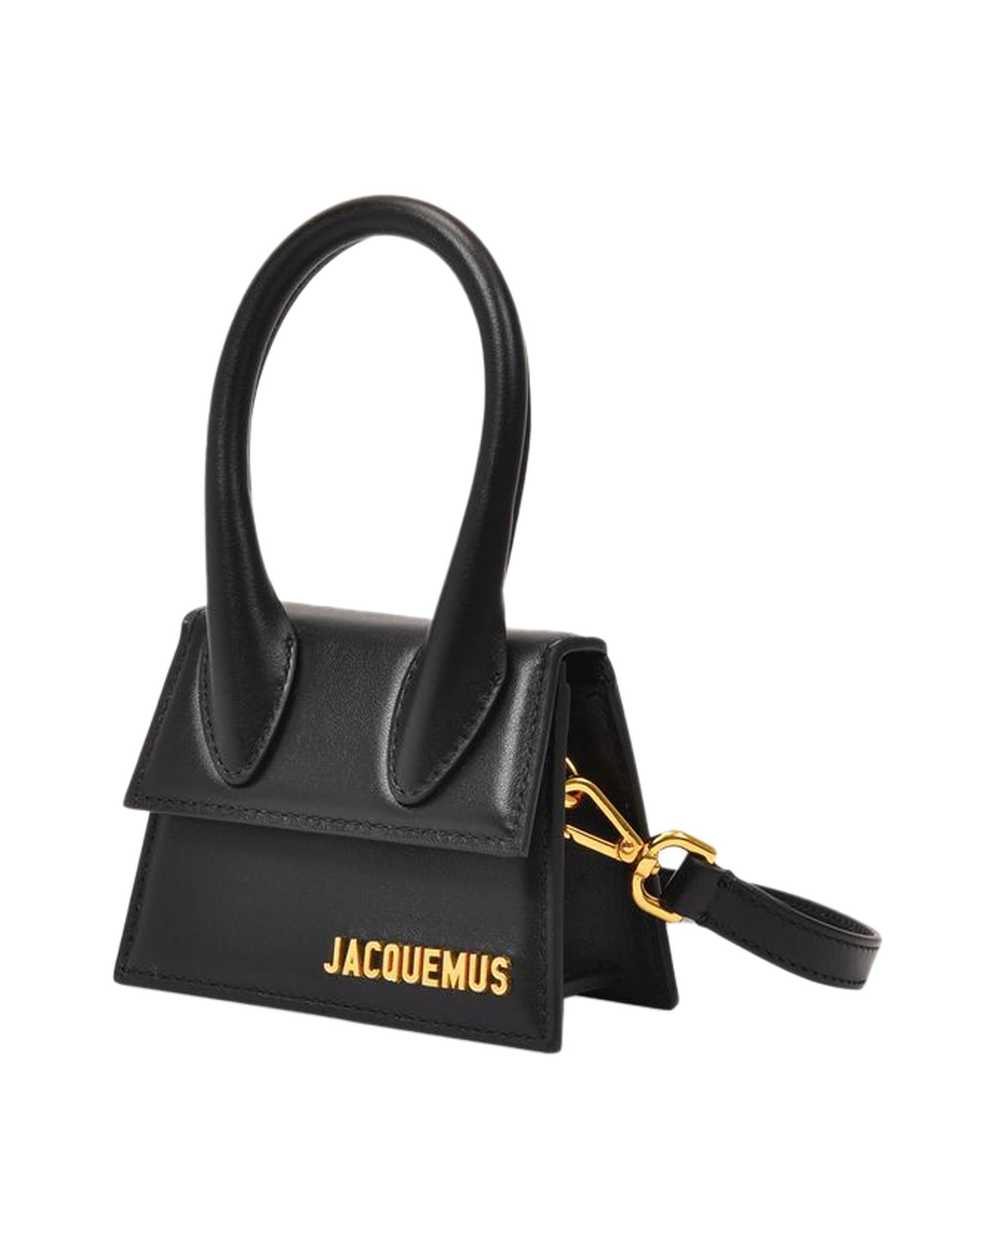 Product Details Black Leather Le Chiquito Bag - image 6